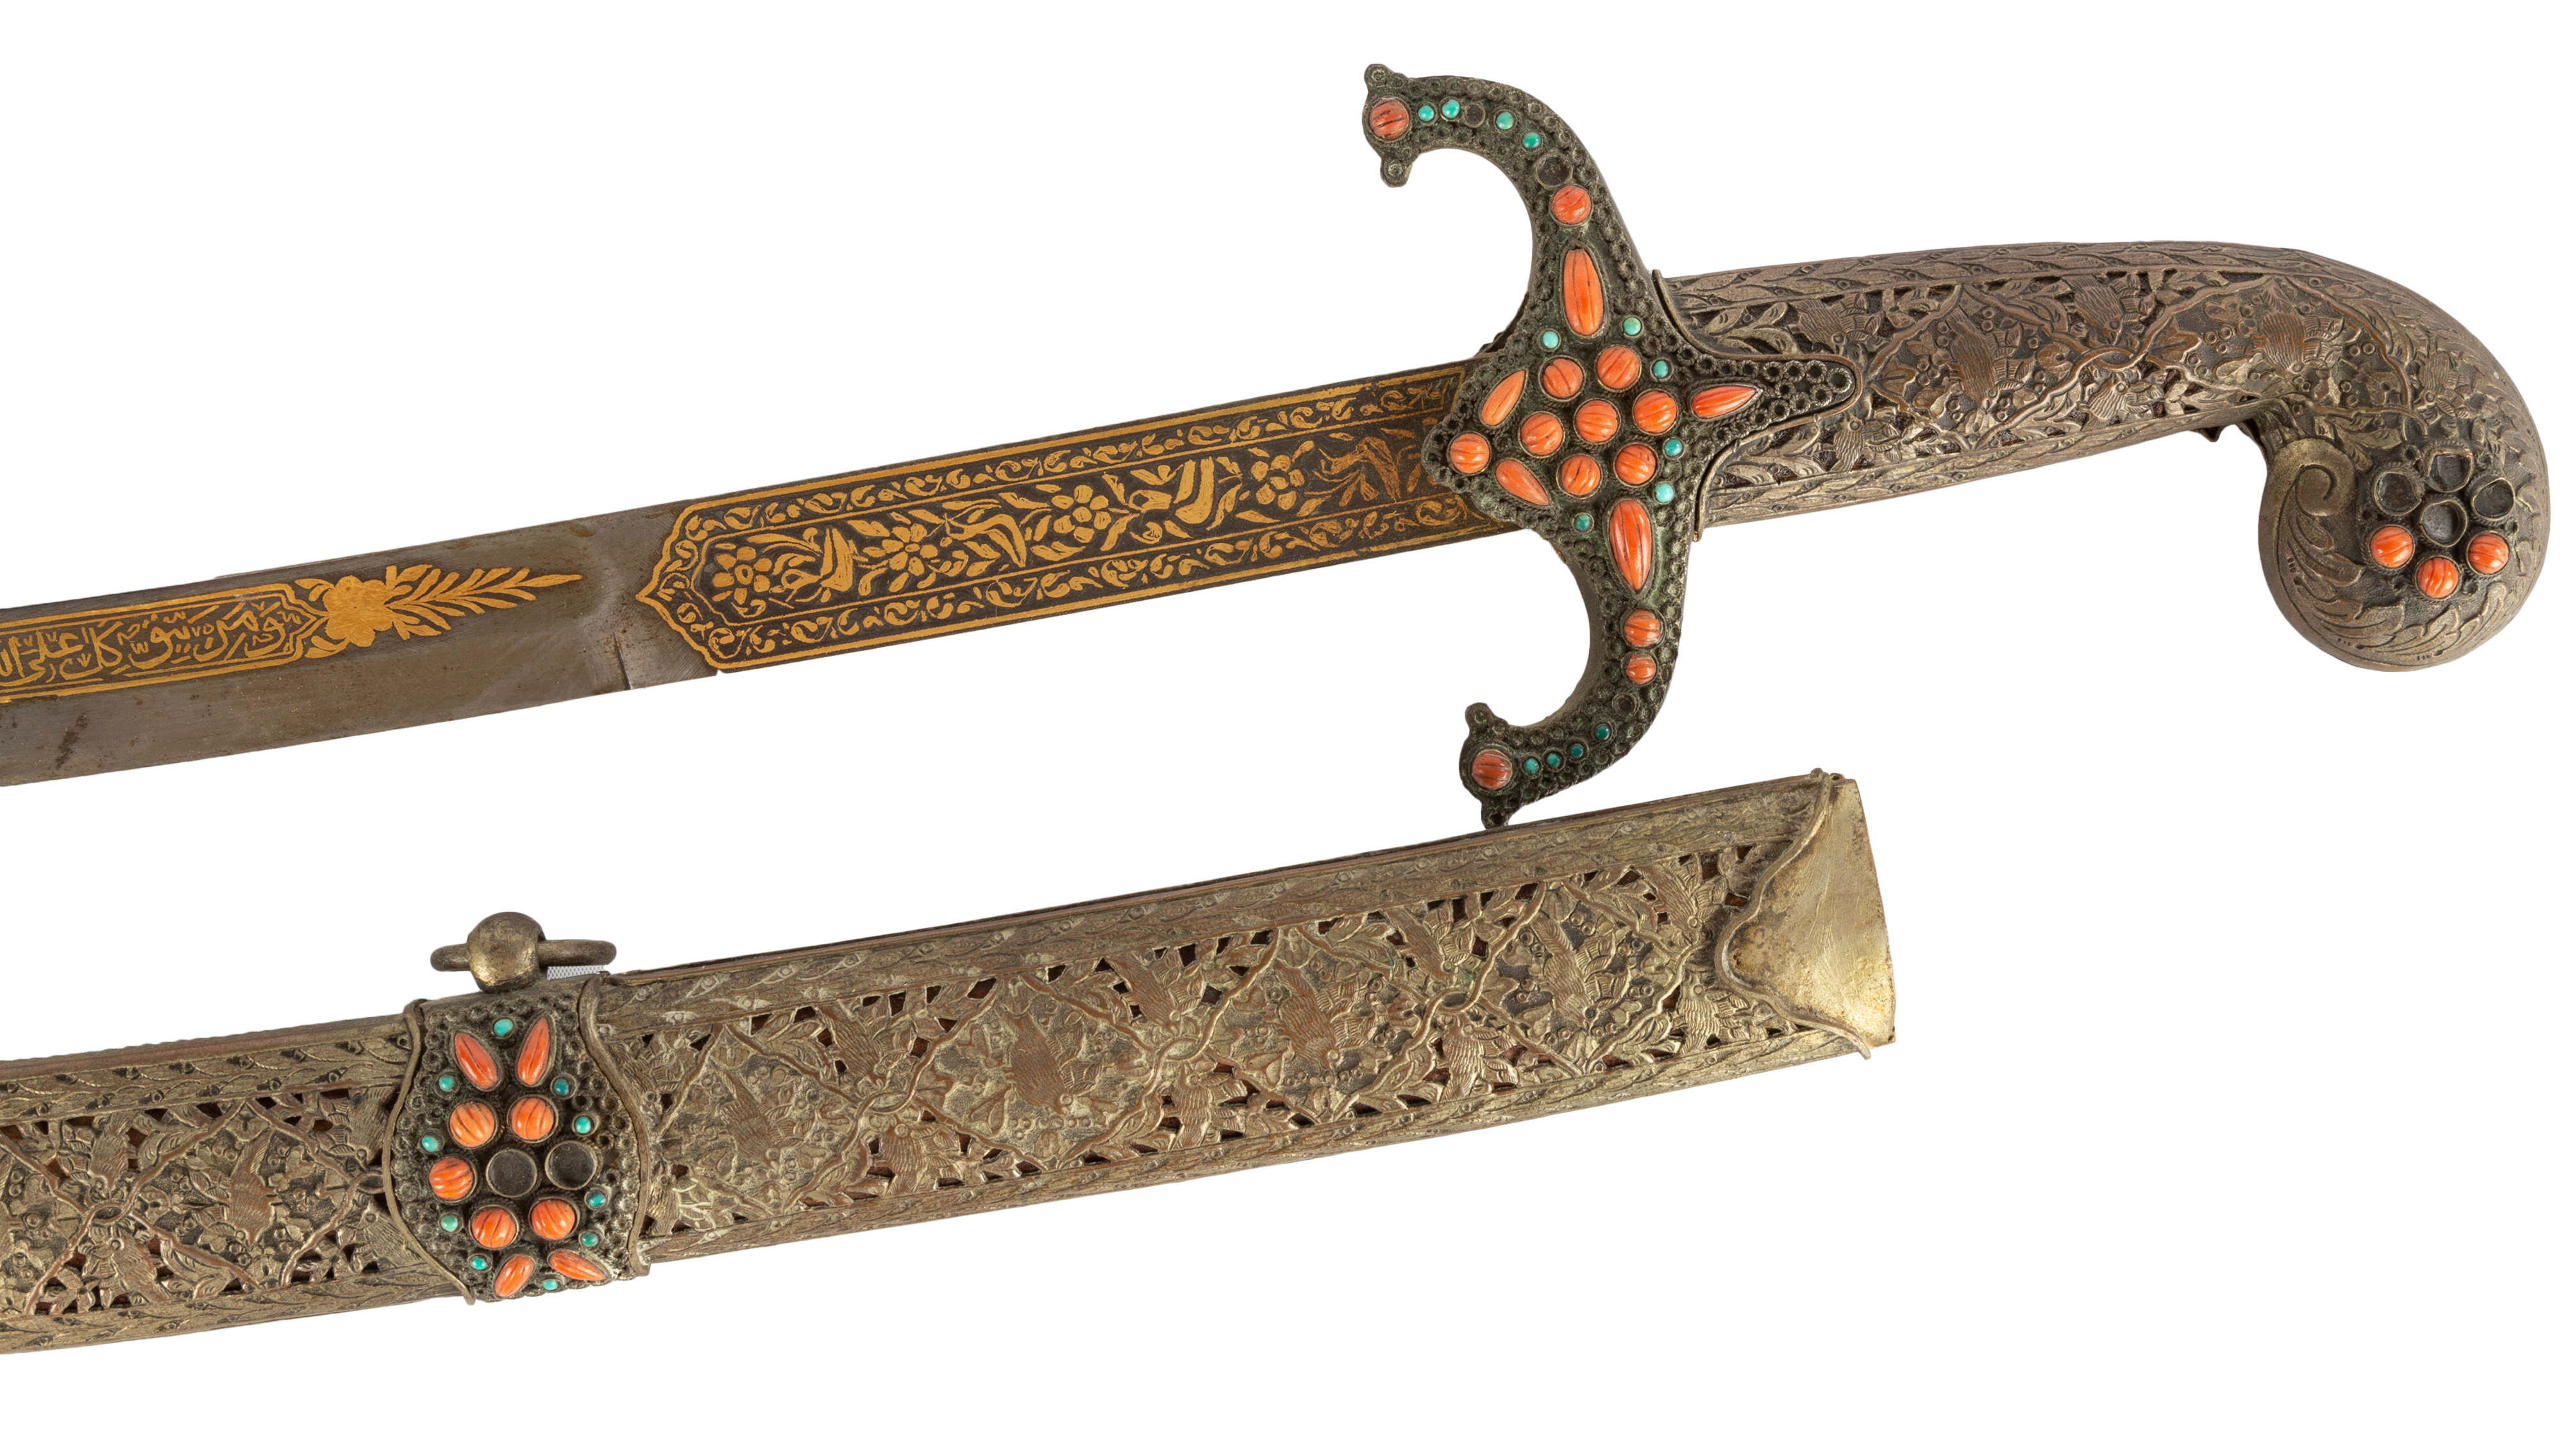 EARLY TURKISH SWORD (KILIJ) WITH